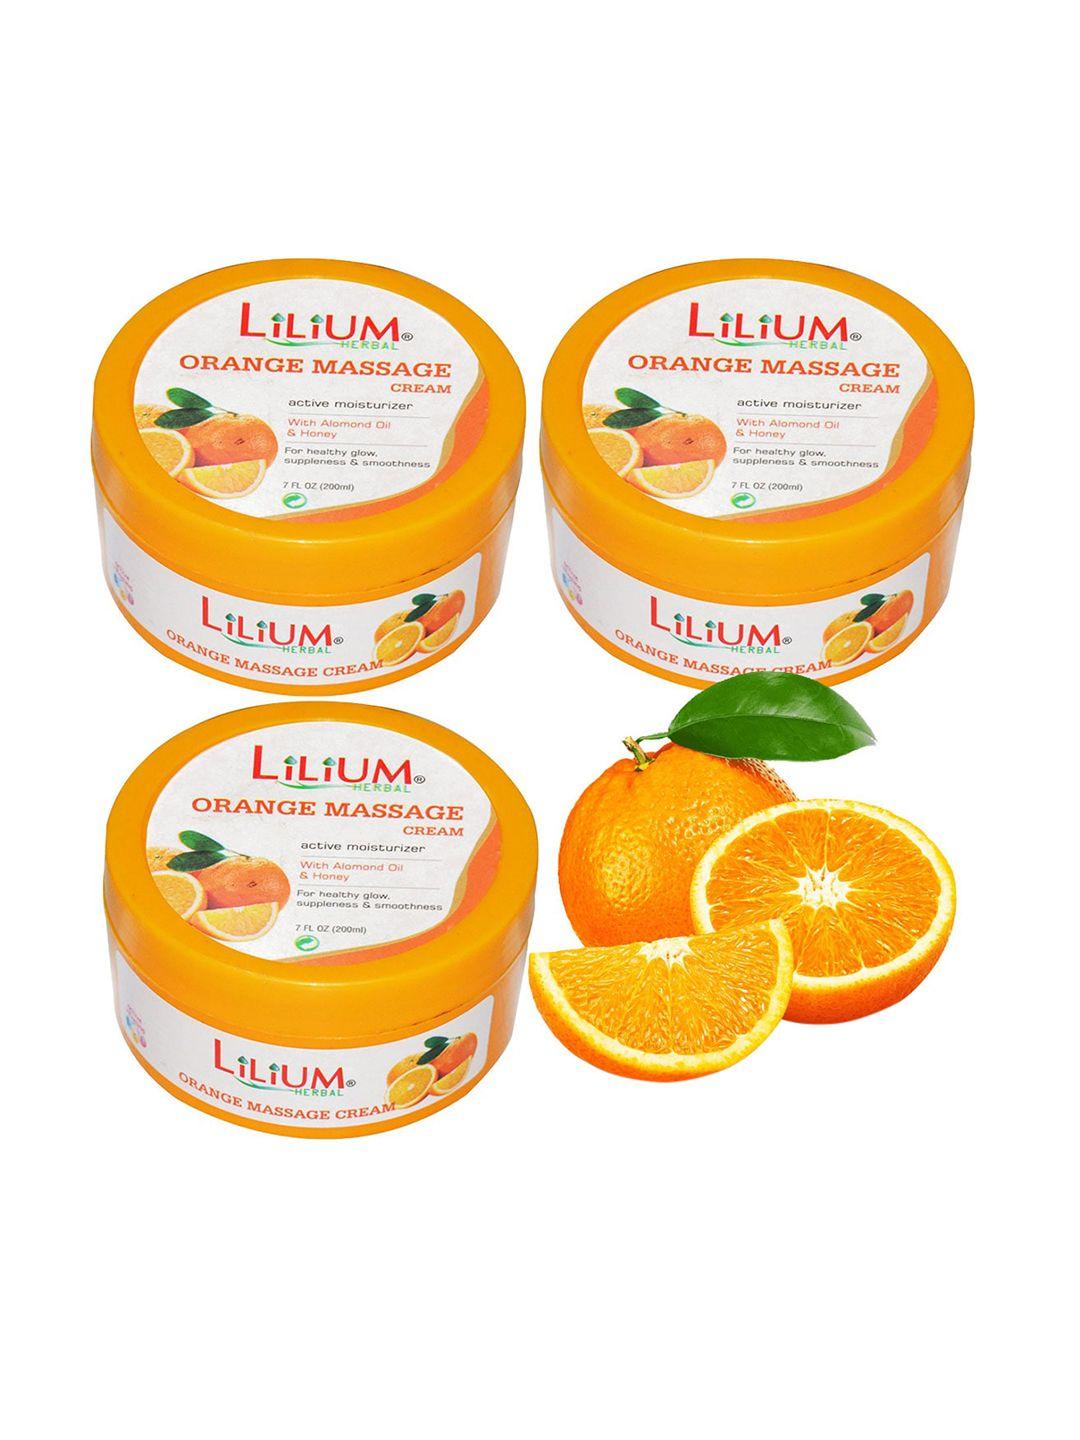 lilium set of 3 massage cream with orange flavor for instant glow, 200ml each